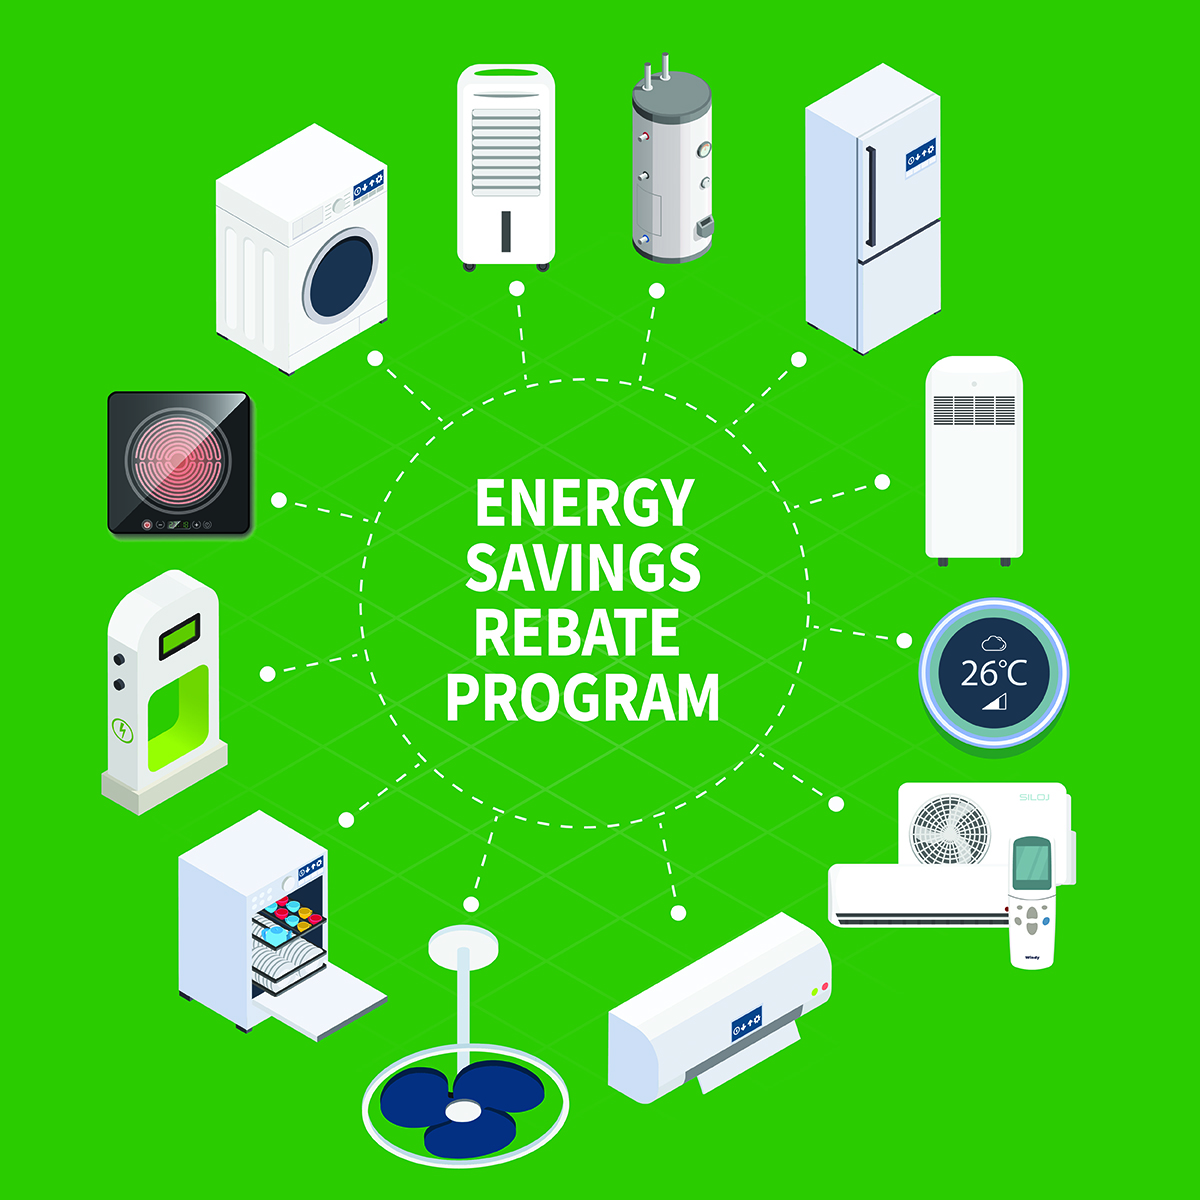 new-rebate-program-to-improve-energy-savings-for-ontarians-bsg